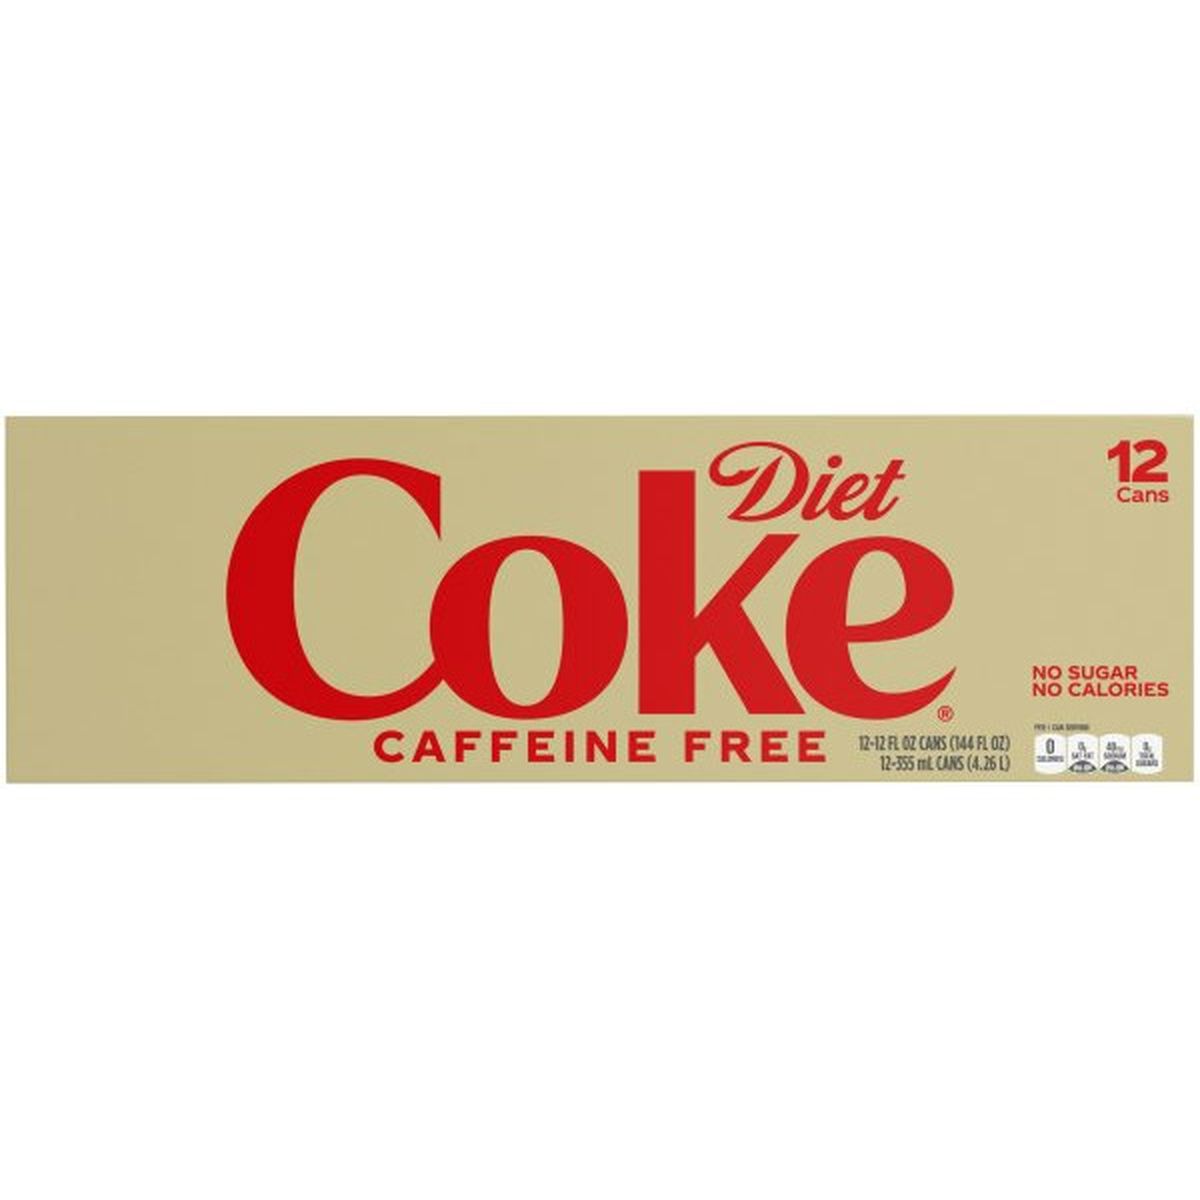 Calories in Coca-Cola caffeine-free diet Coke Diet Cola